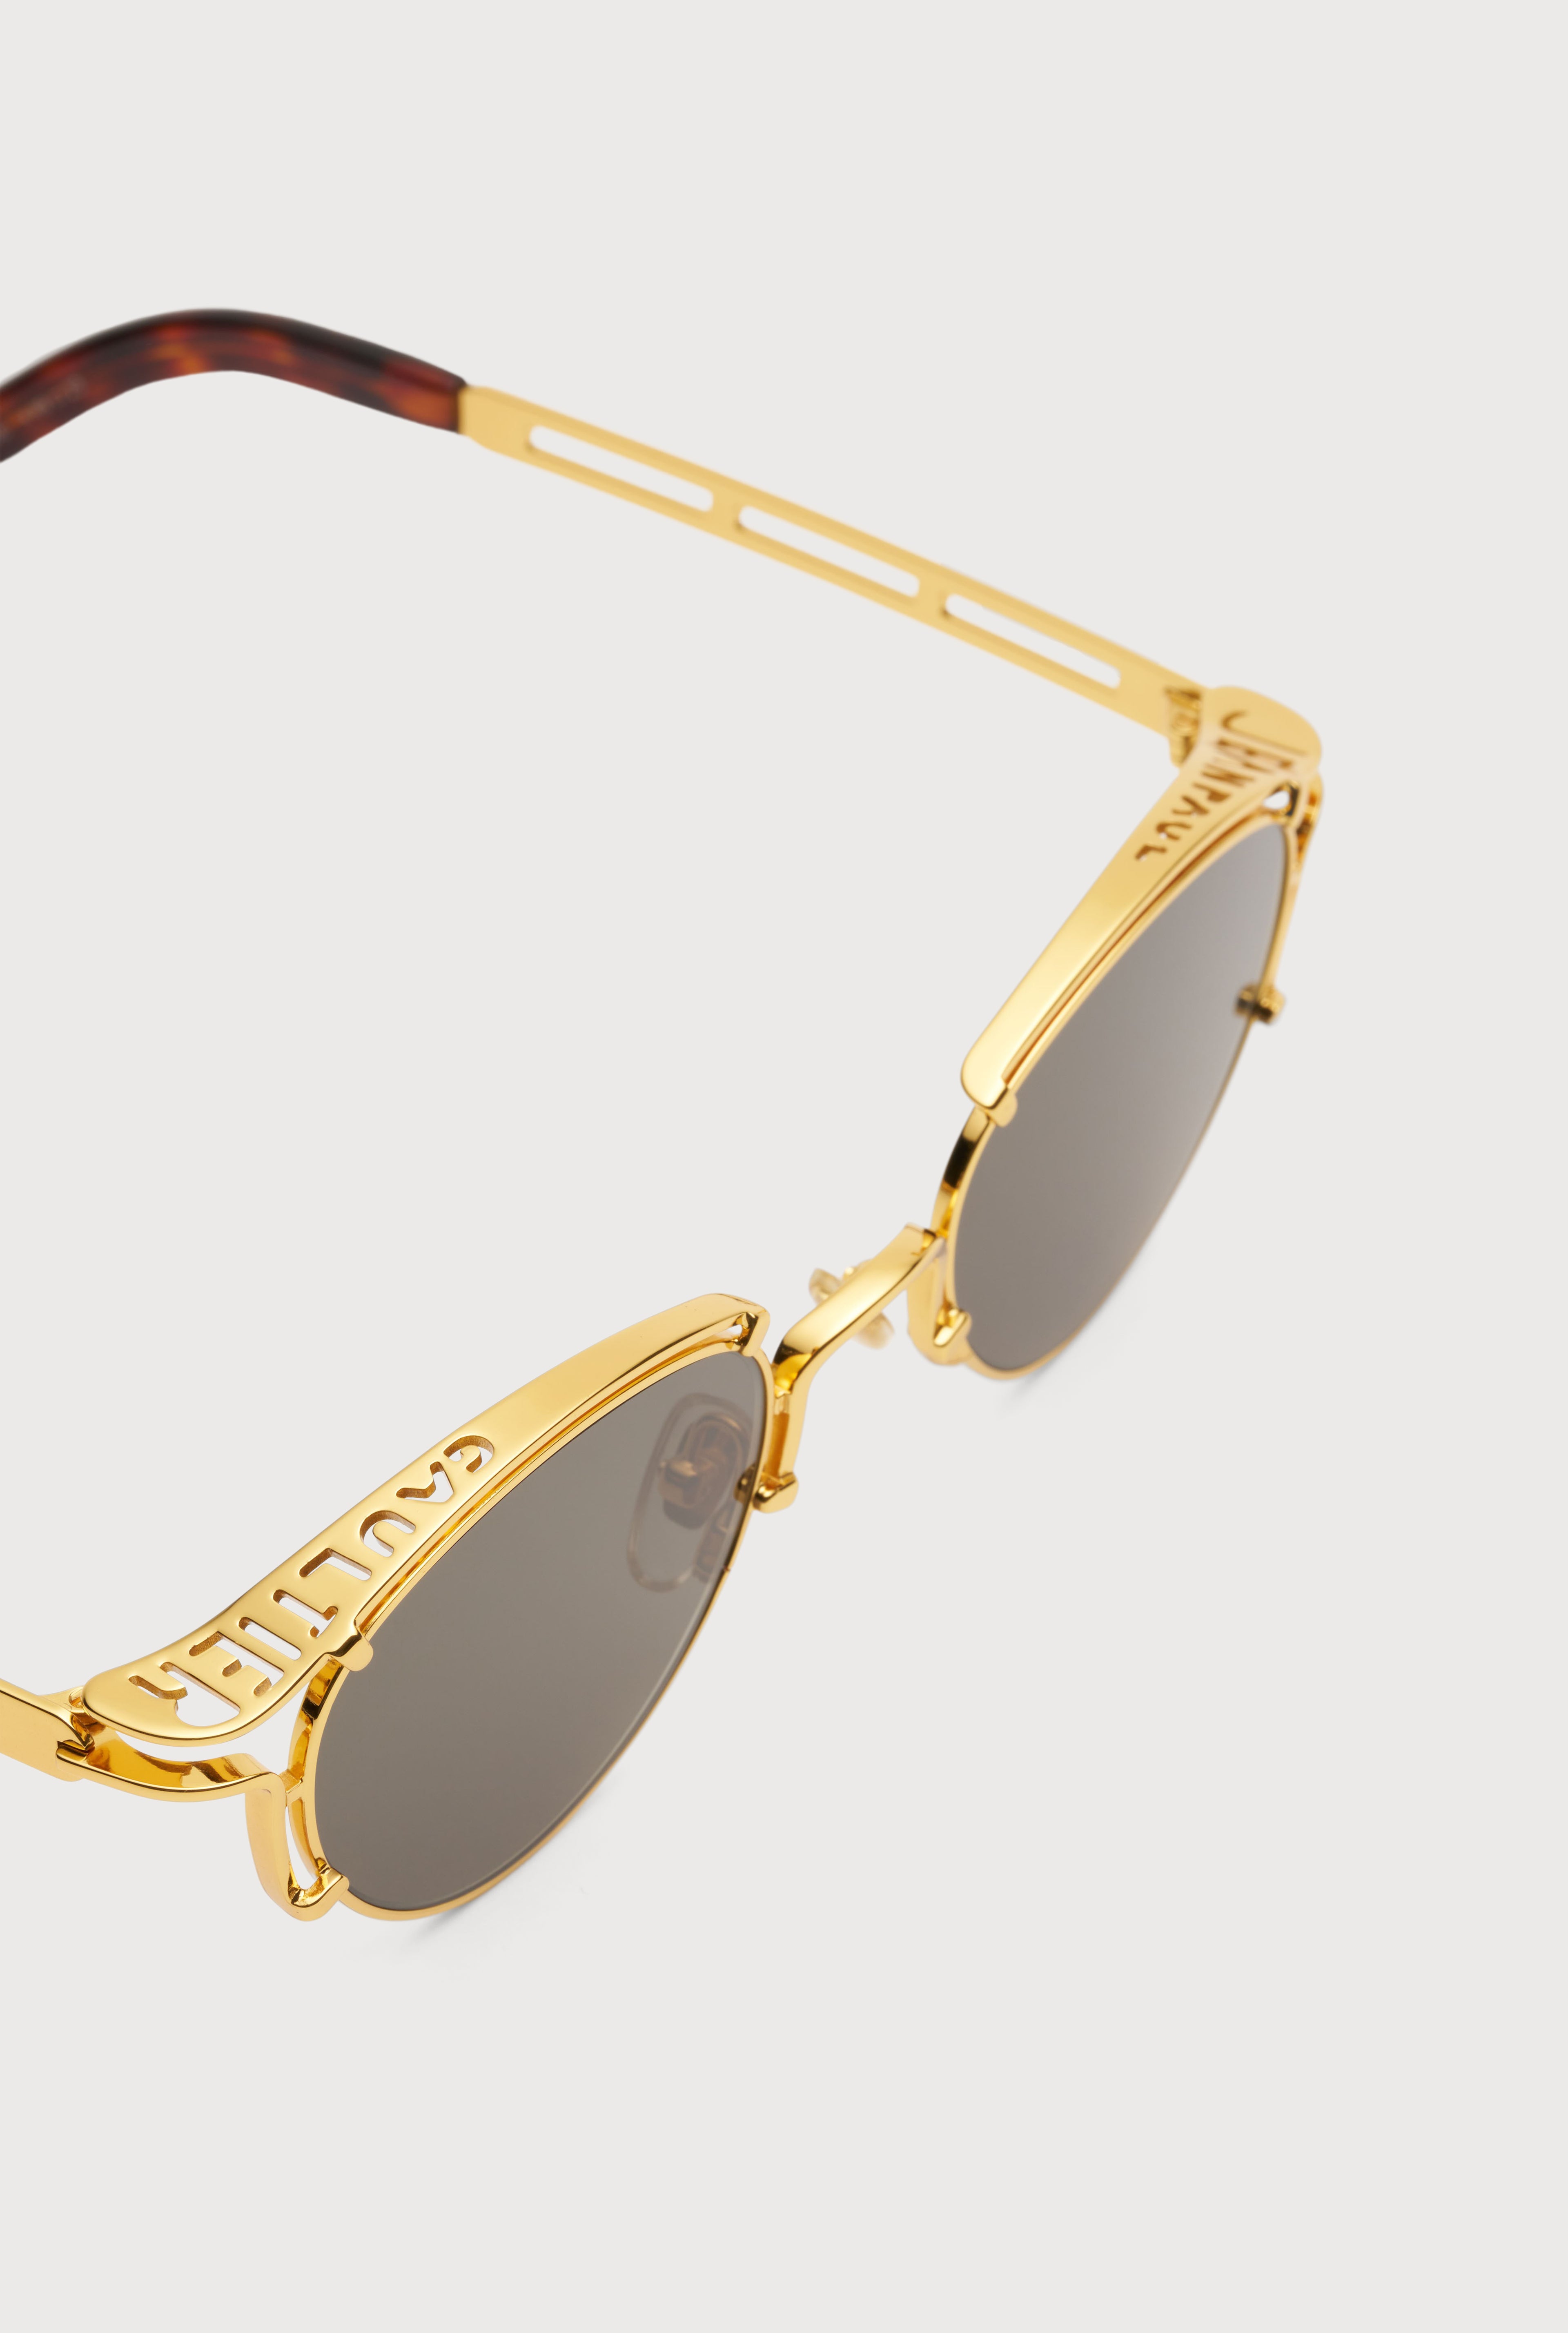 The Gold 56-5102 Sunglasses